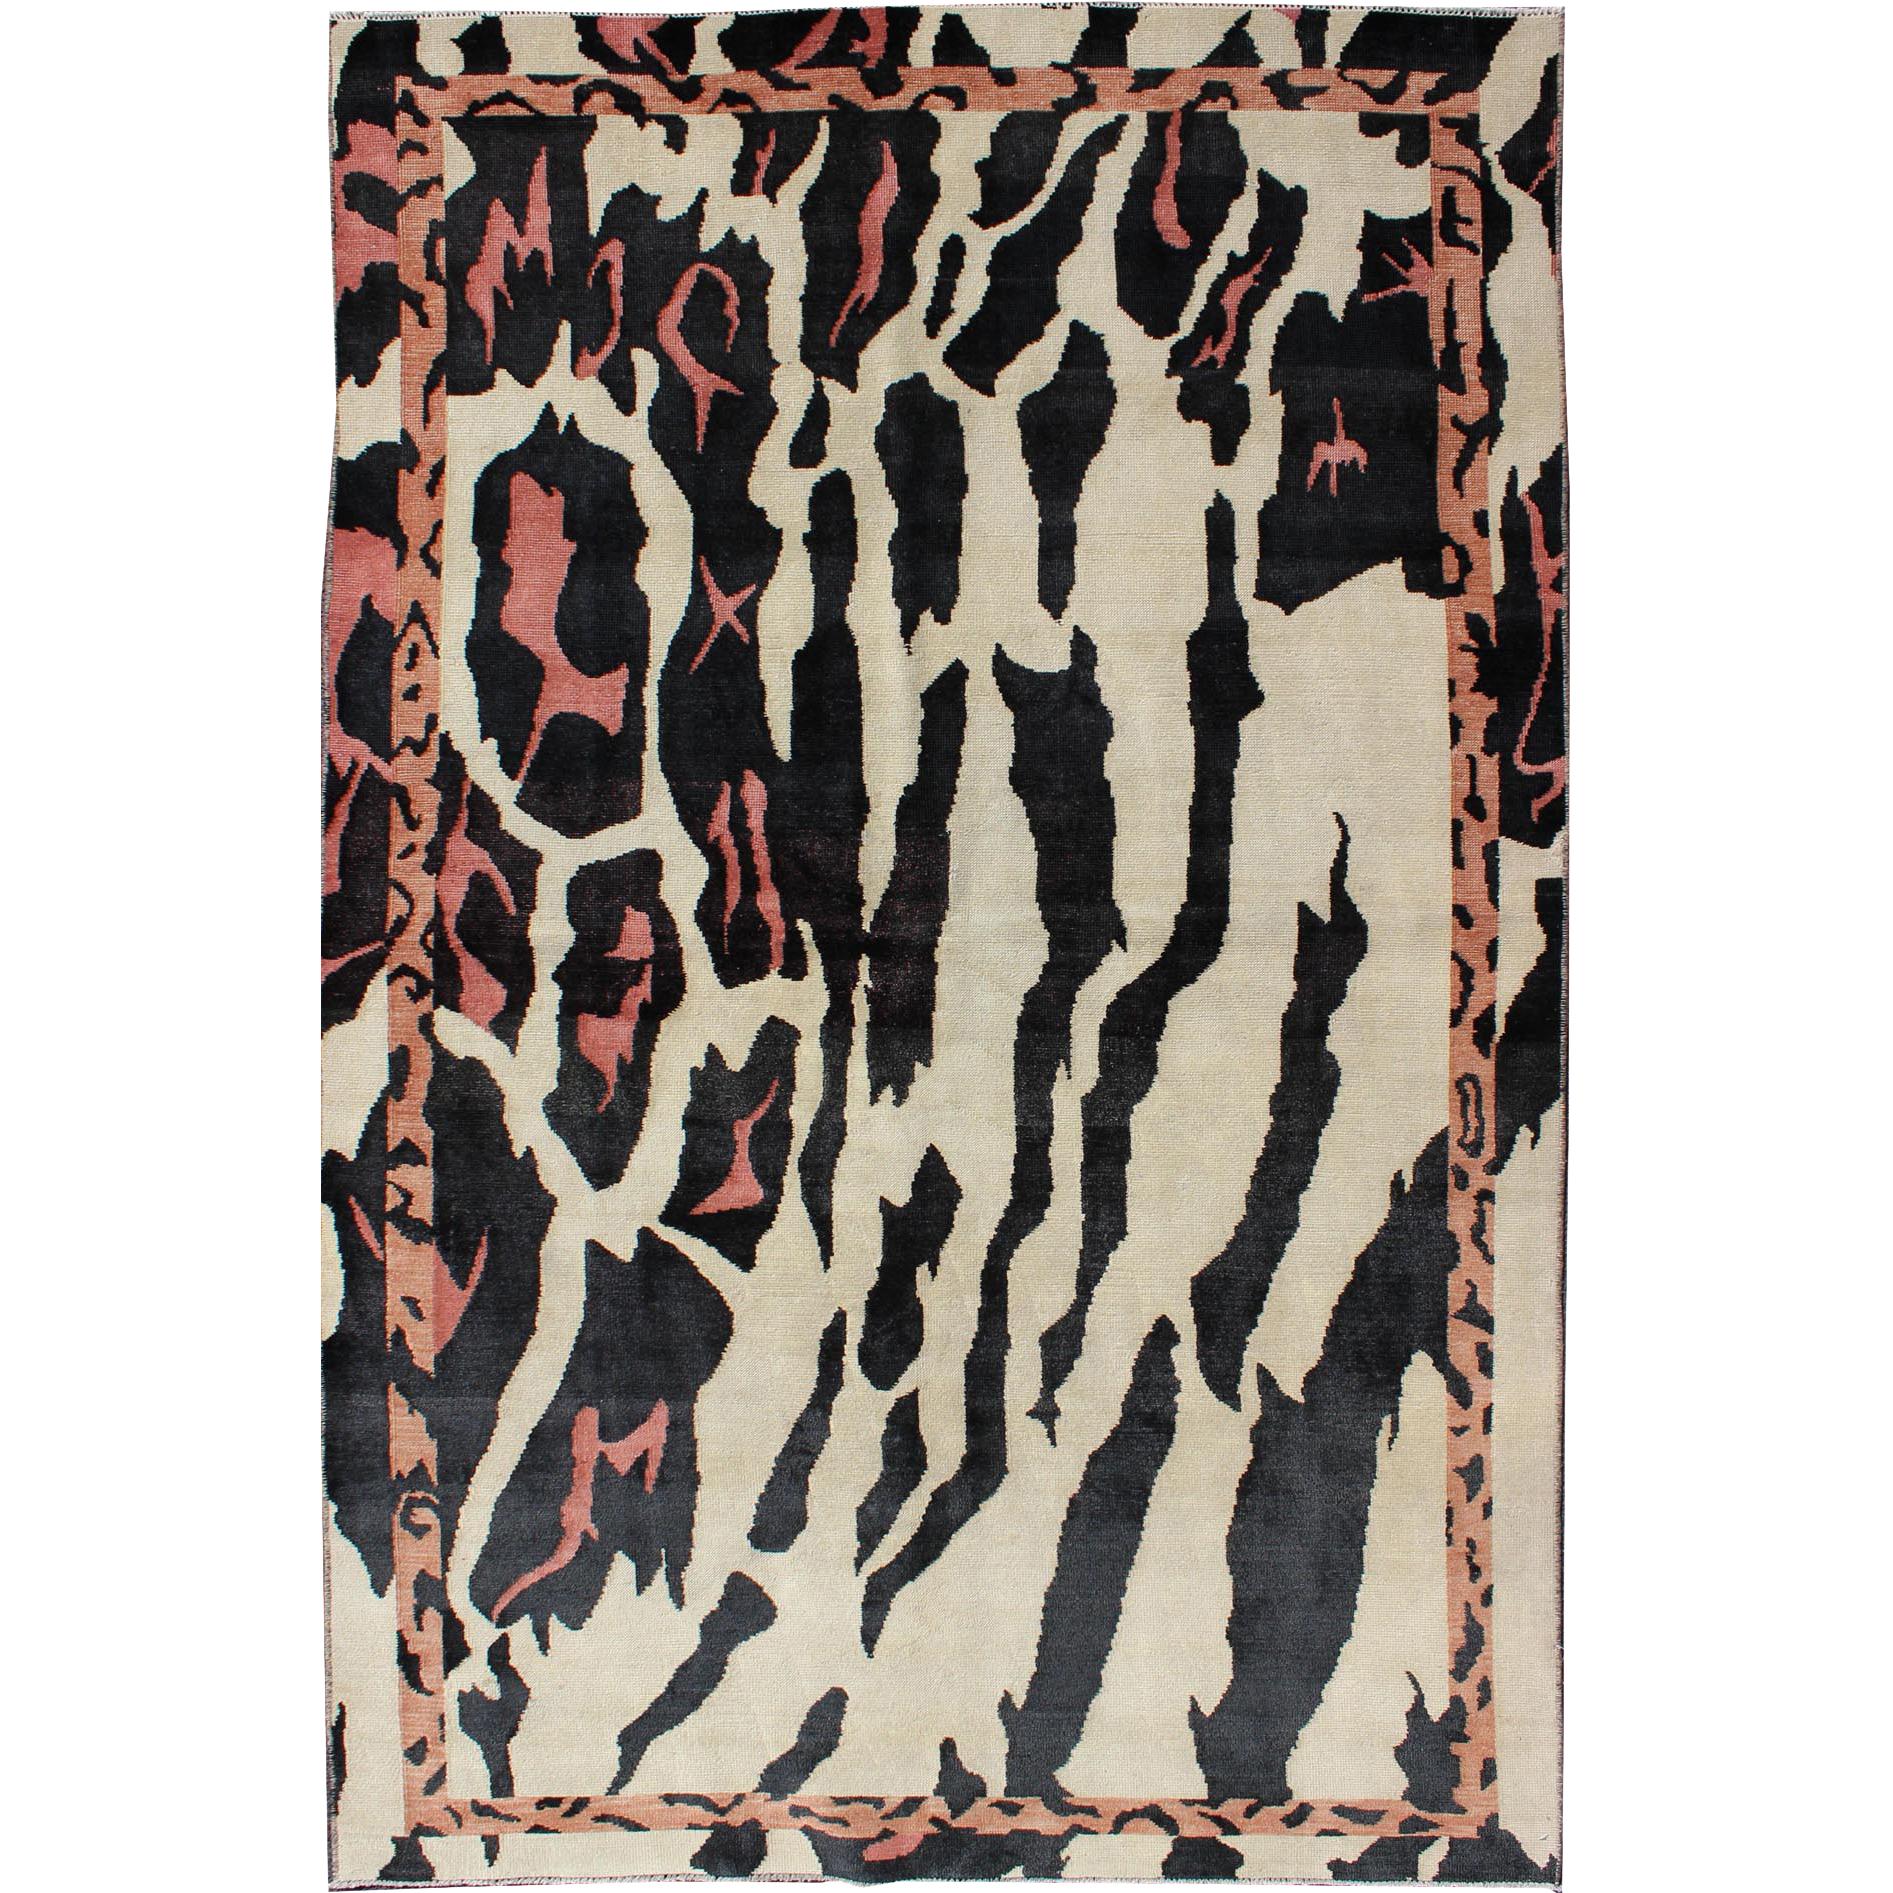 Unique Mid-Century Modern Rug with Zebra Skin Design in Black, Cream & Pink For Sale